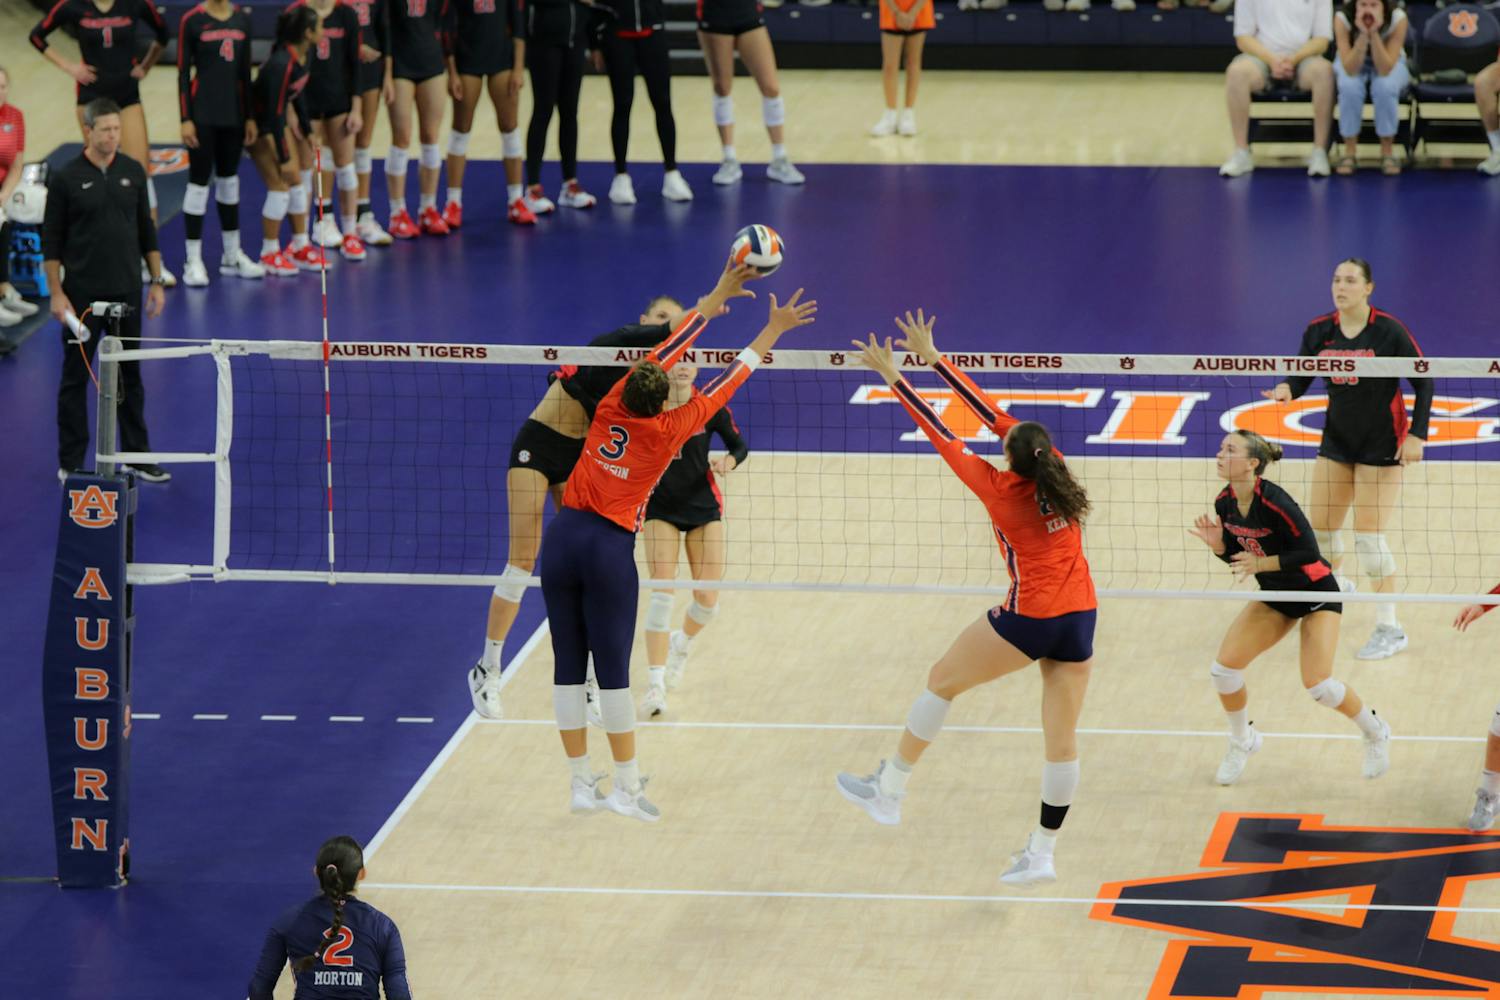 Auburn vs. Georgia Women’s Volleyball